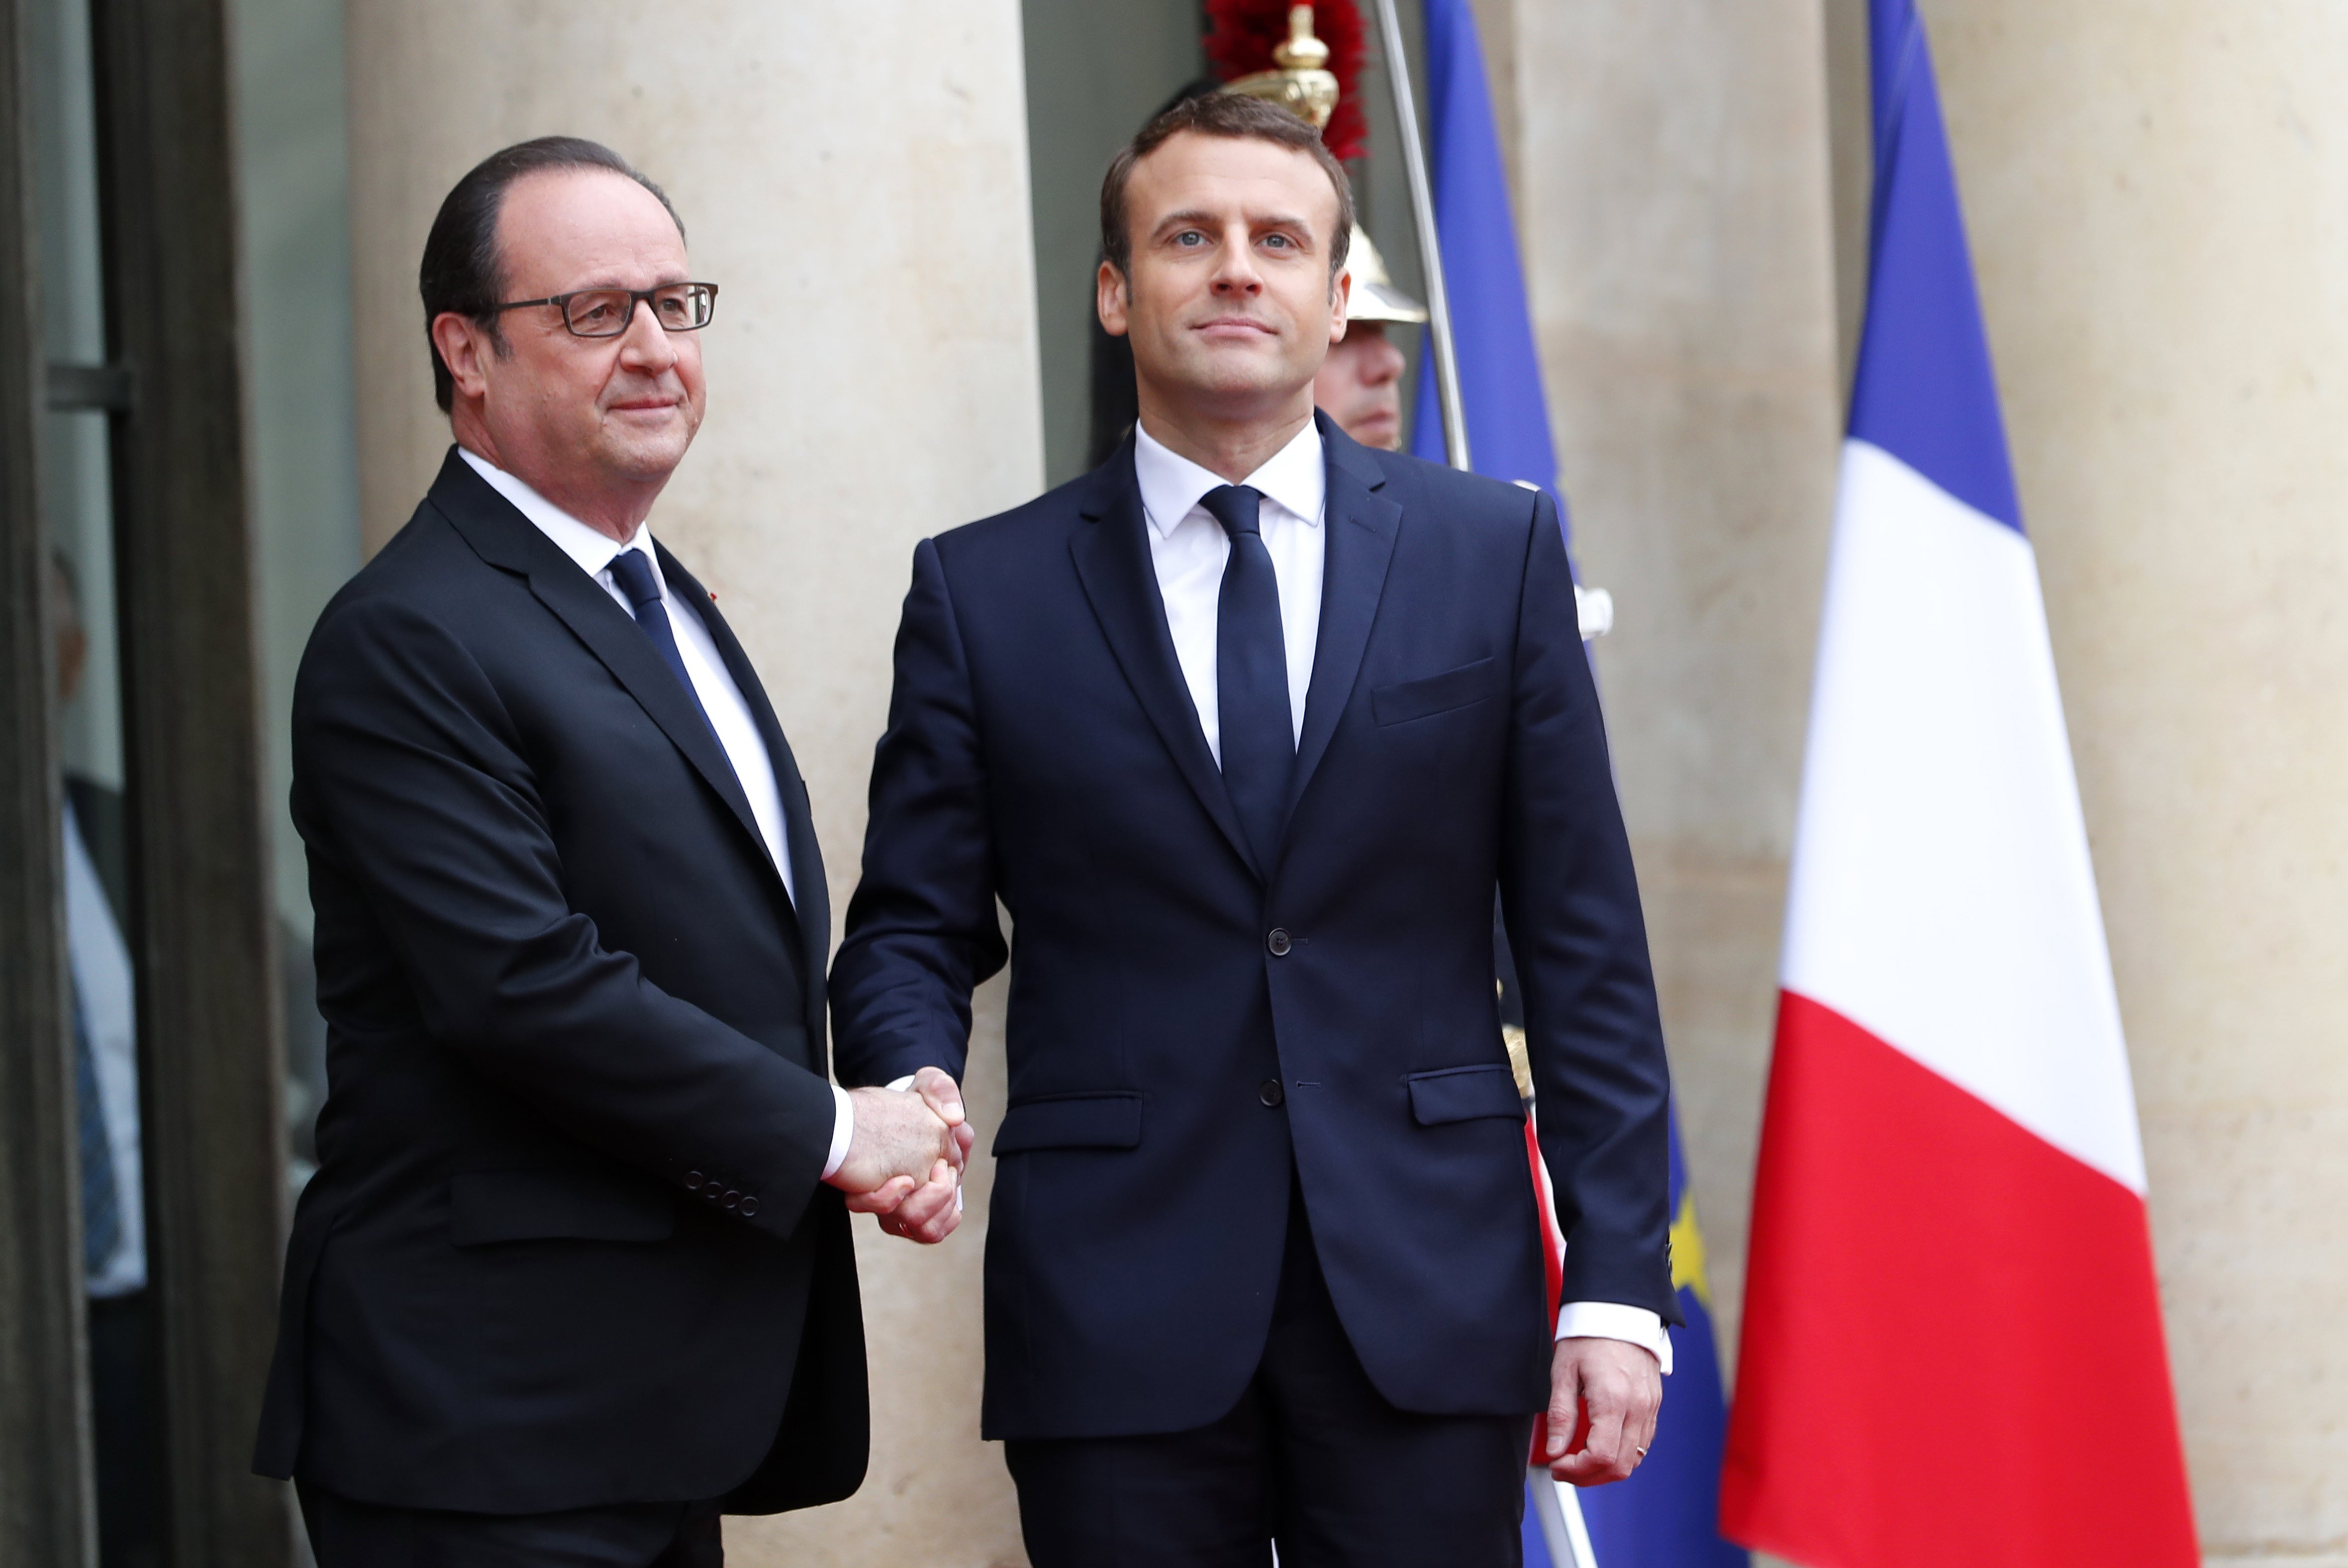 Macron, nou president de França